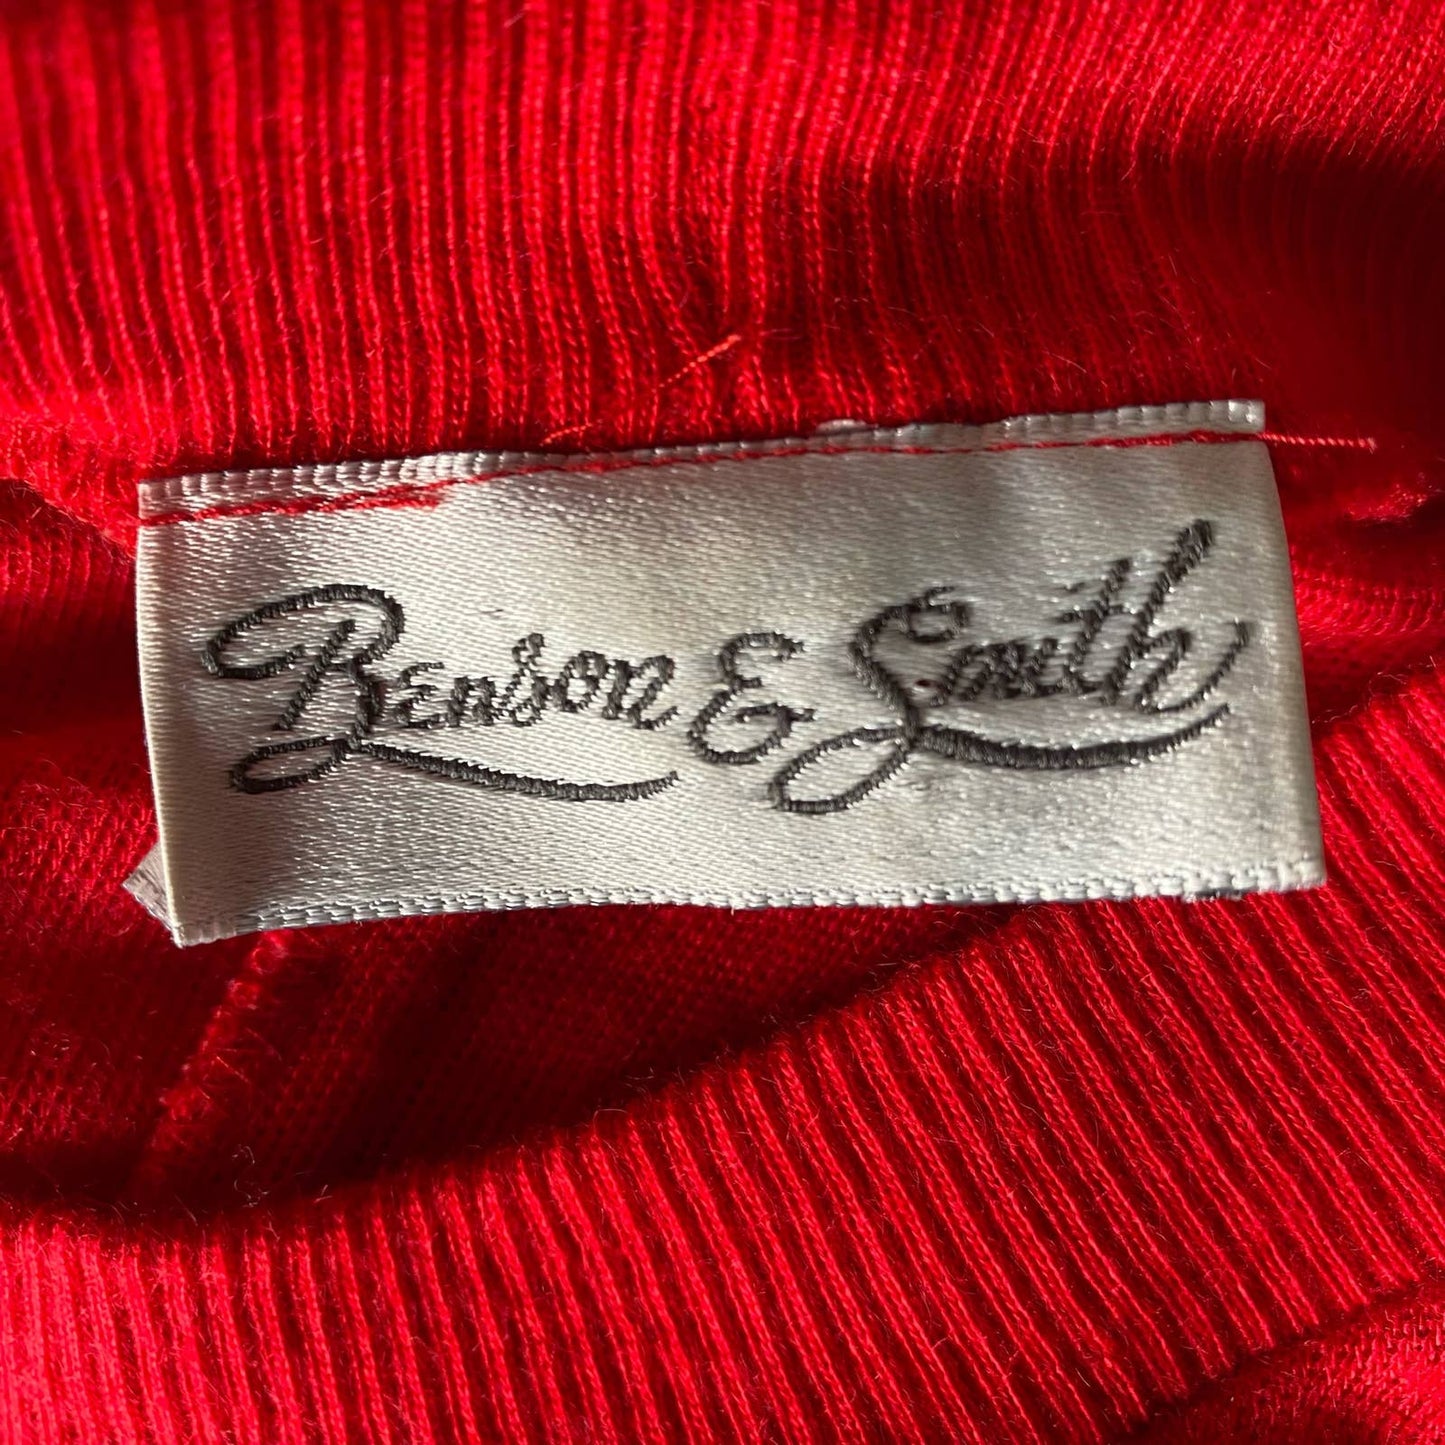 Benson & Smith sz 3XL  Vintage 80s wool sweater dress